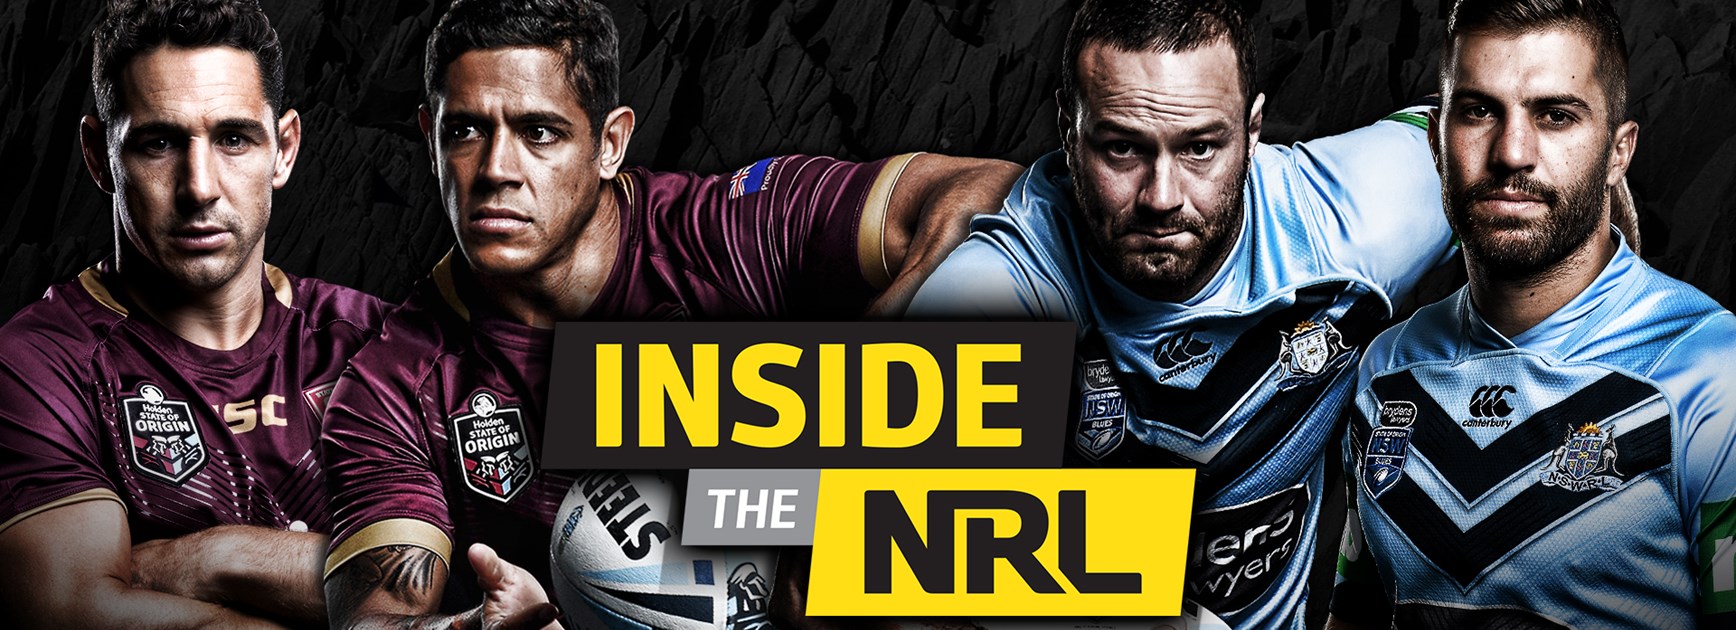 Watch: Inside the NRL - Origin edition